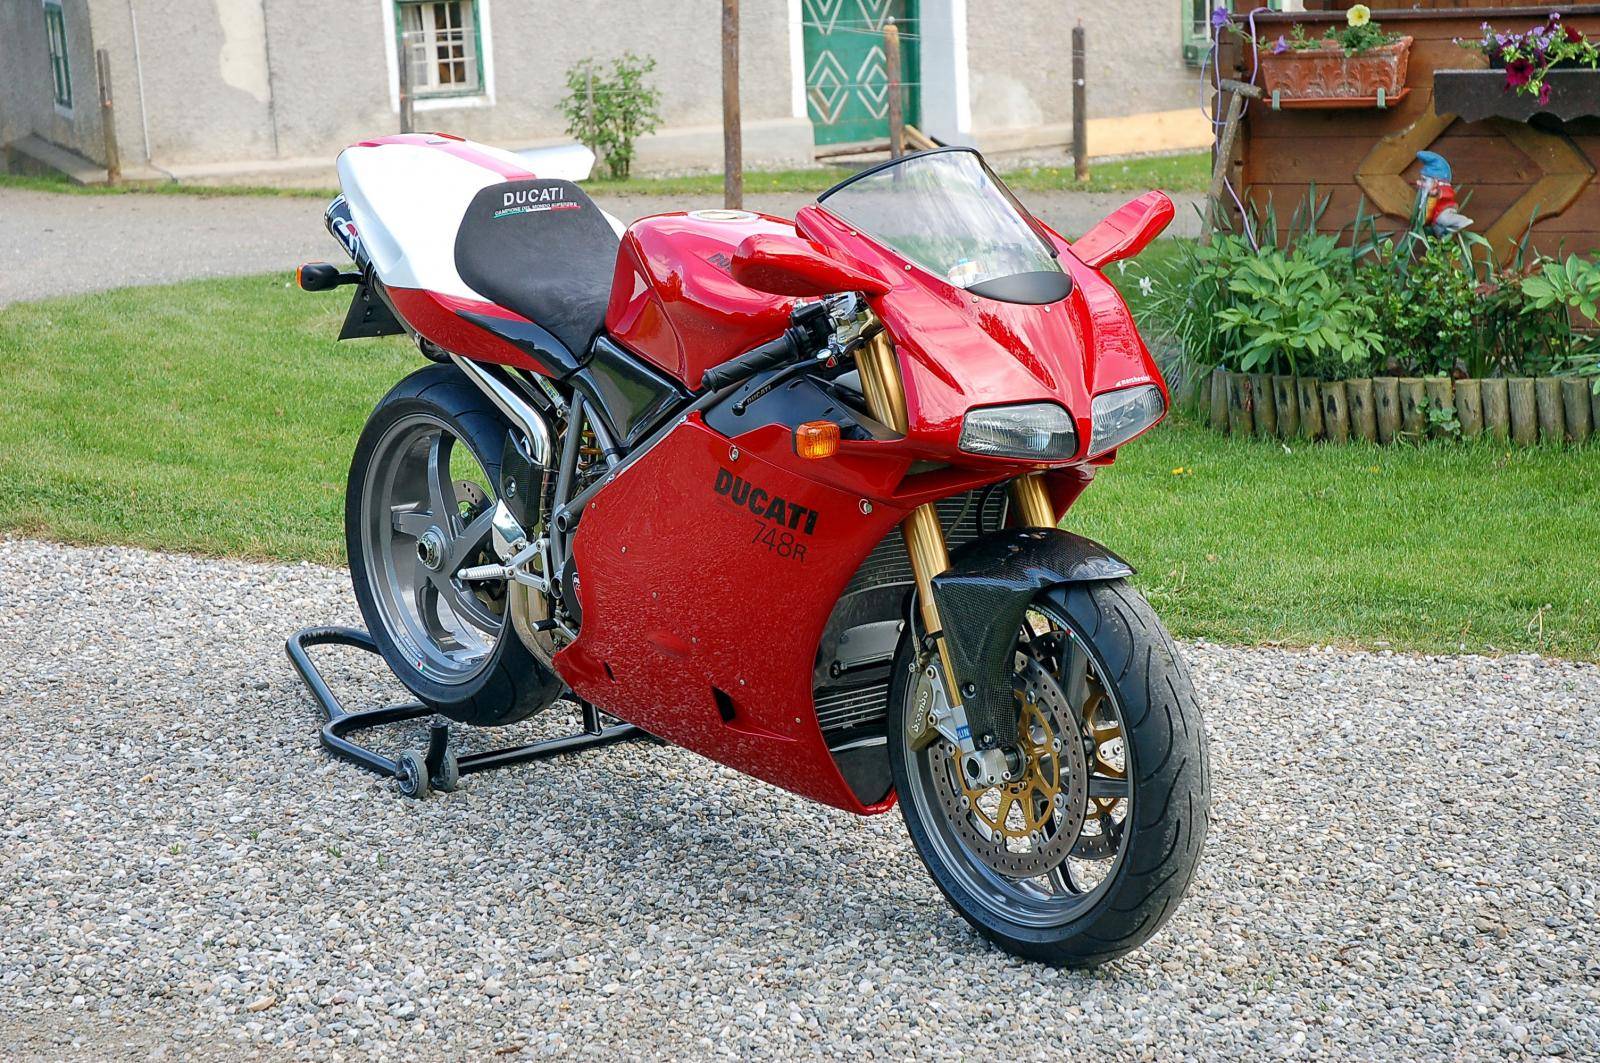 Мотоцикл ducati 748 r 2002 - изучаем по порядку